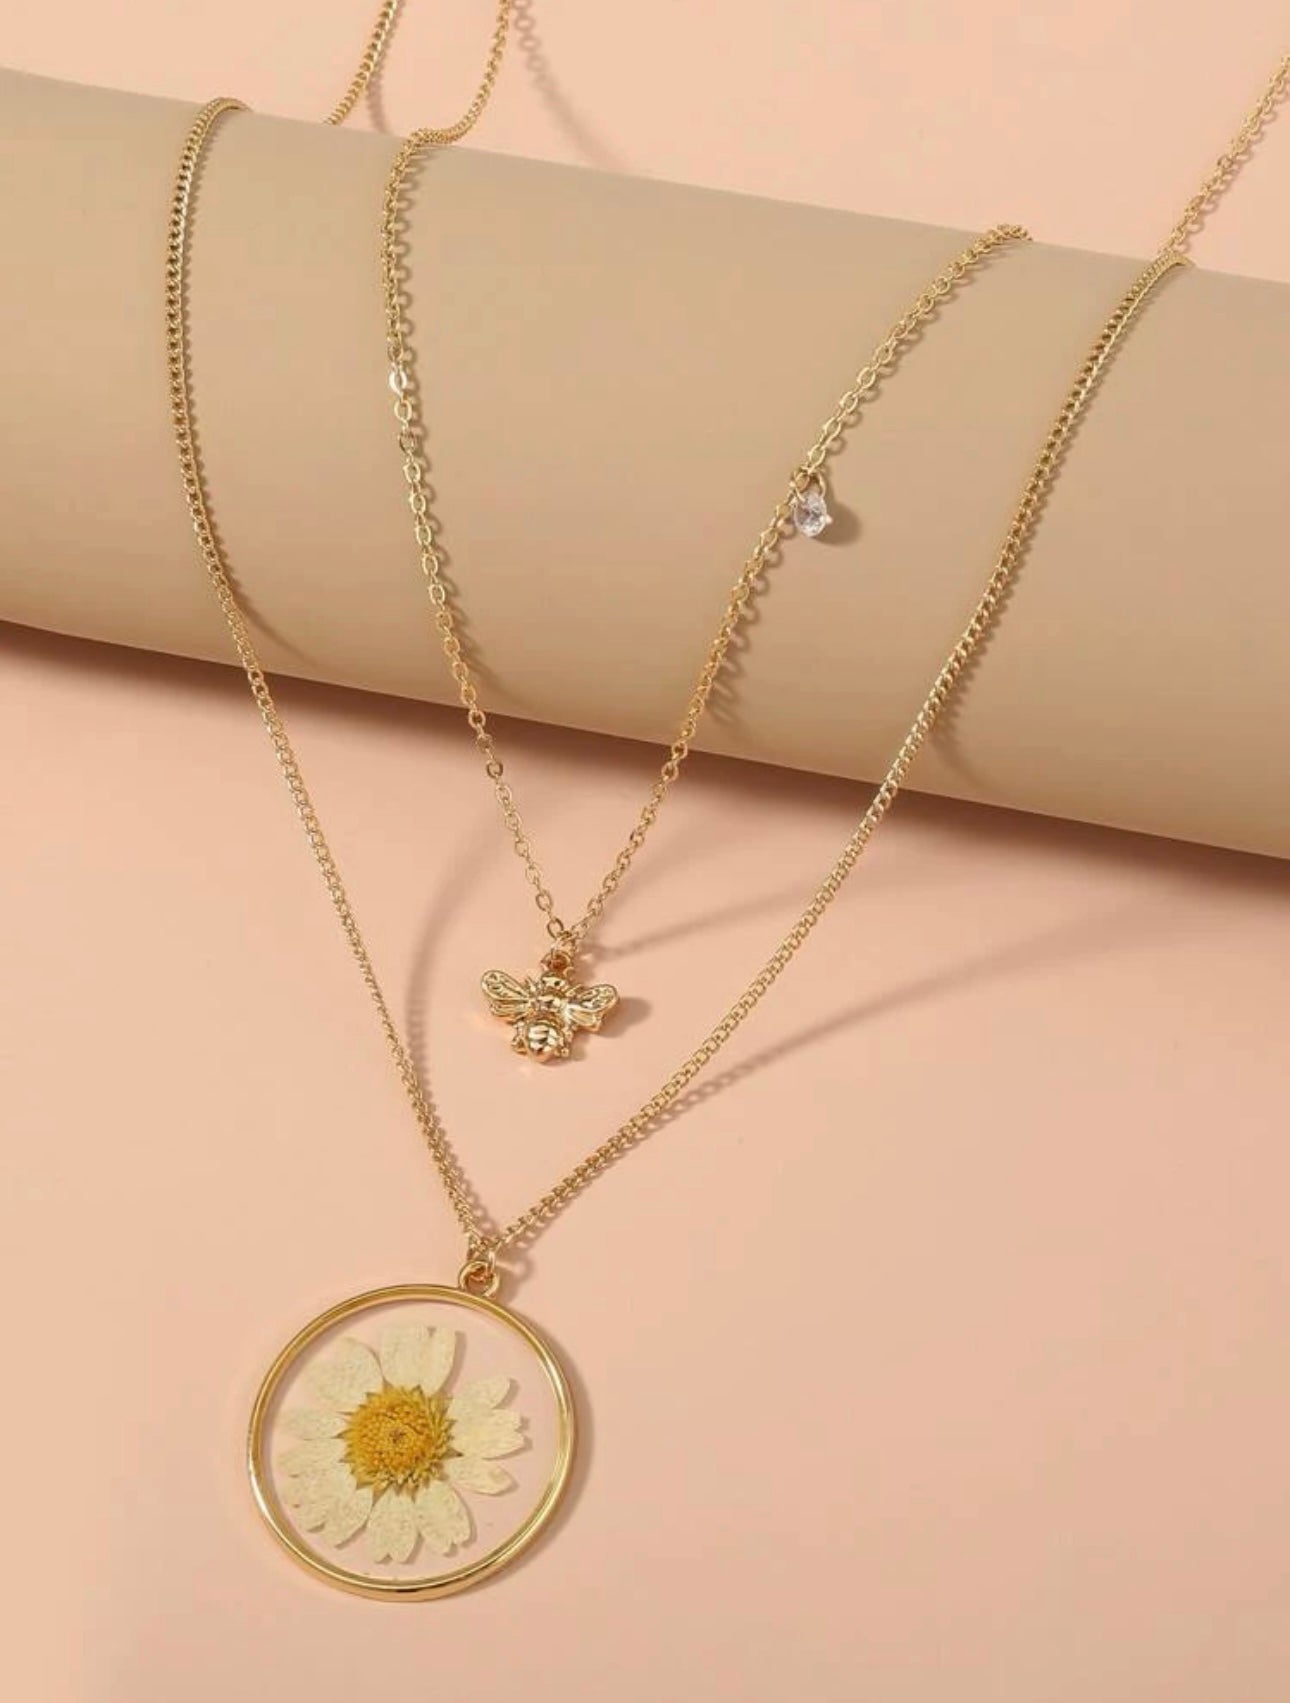 Daisy butterfly necklace